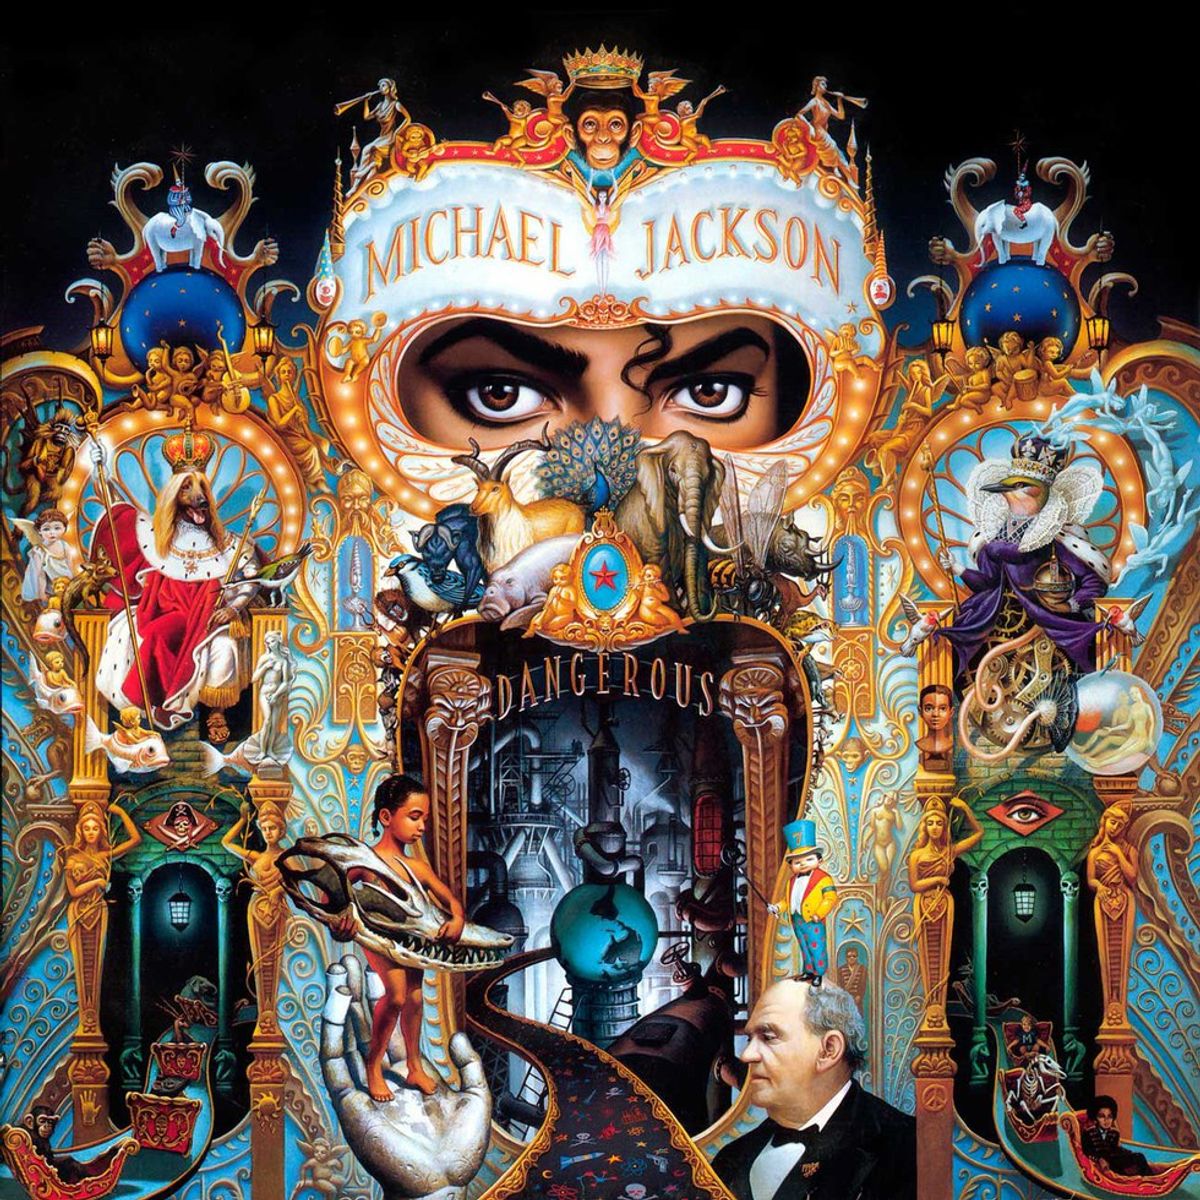 25 Years Since Michael Jackson's Dangerous: A Review